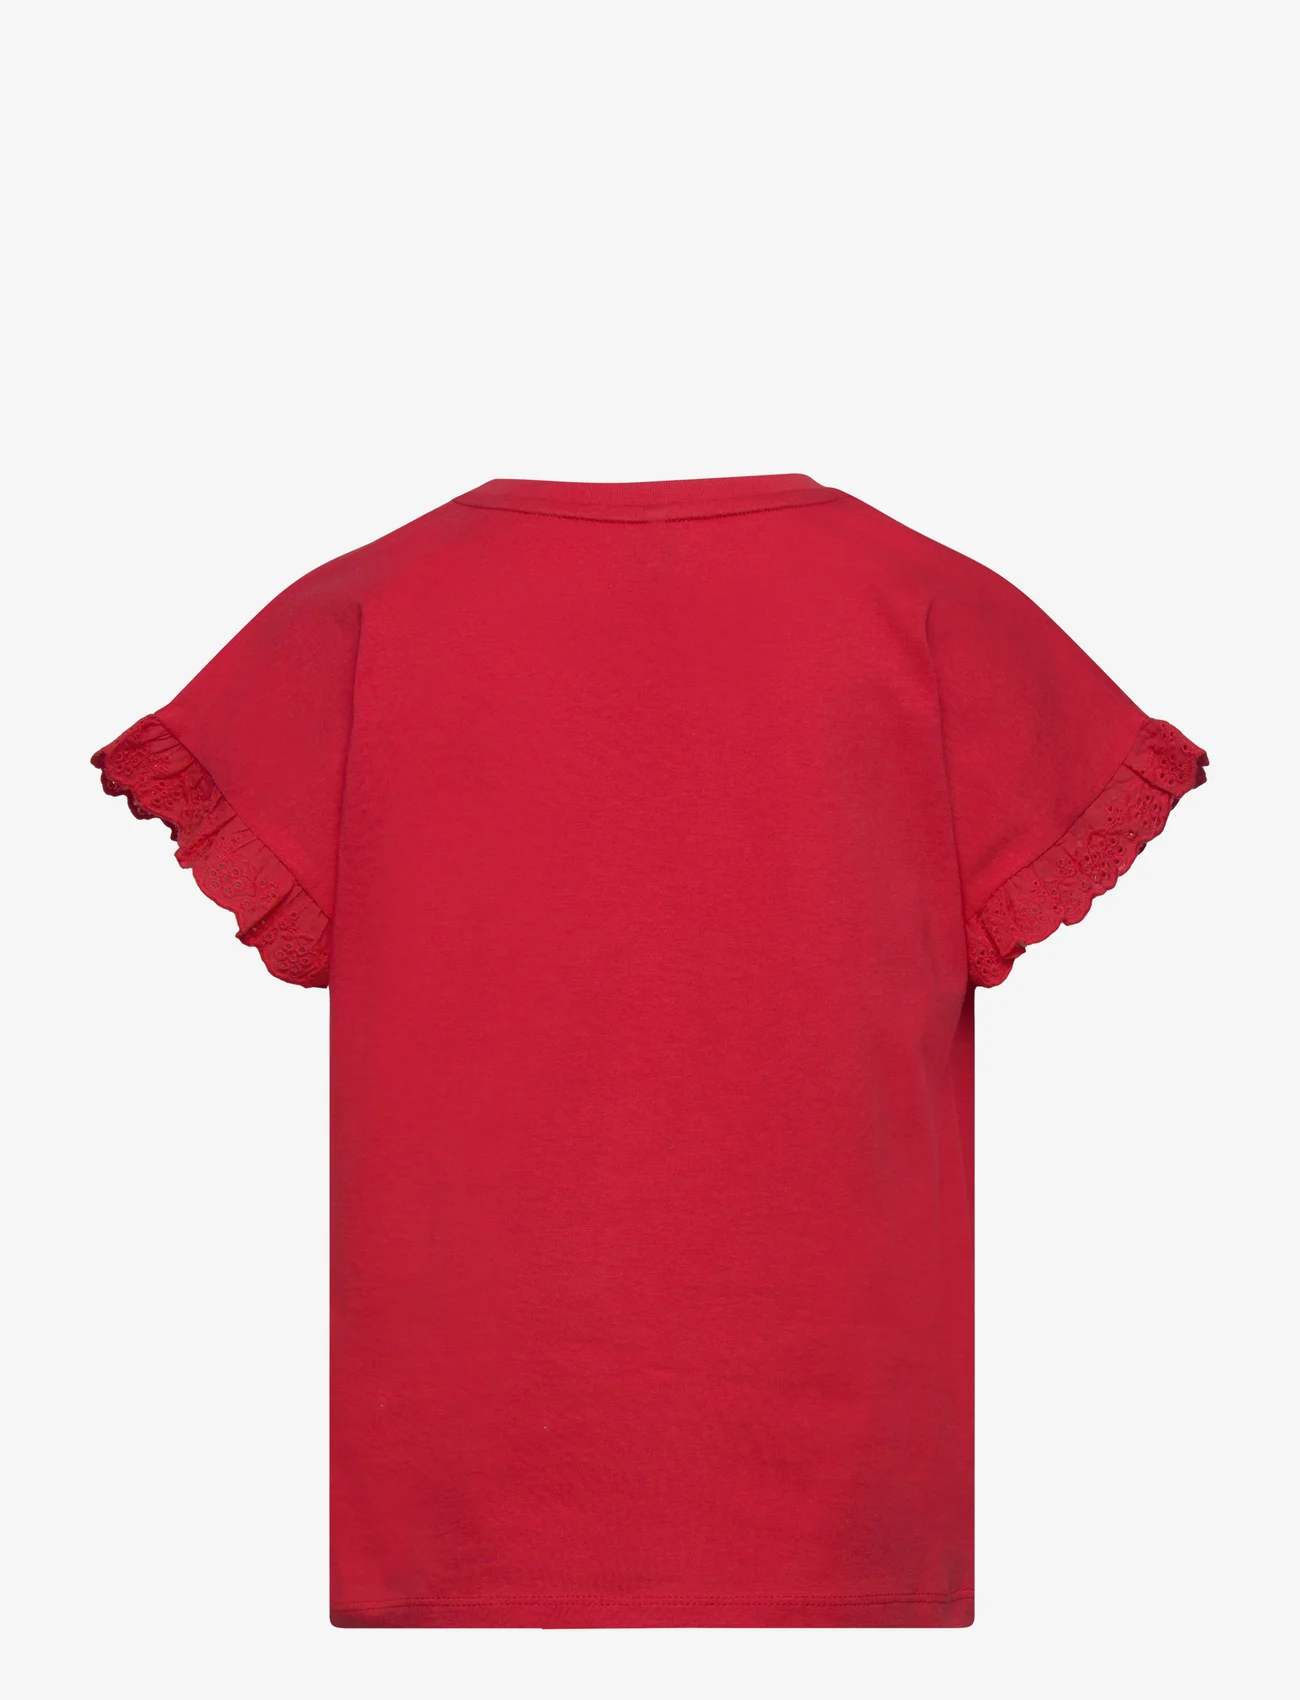 Kids Only - KOGIRIS S/S EMB TOP JRS - short-sleeved t-shirts - flame scarlet - 1